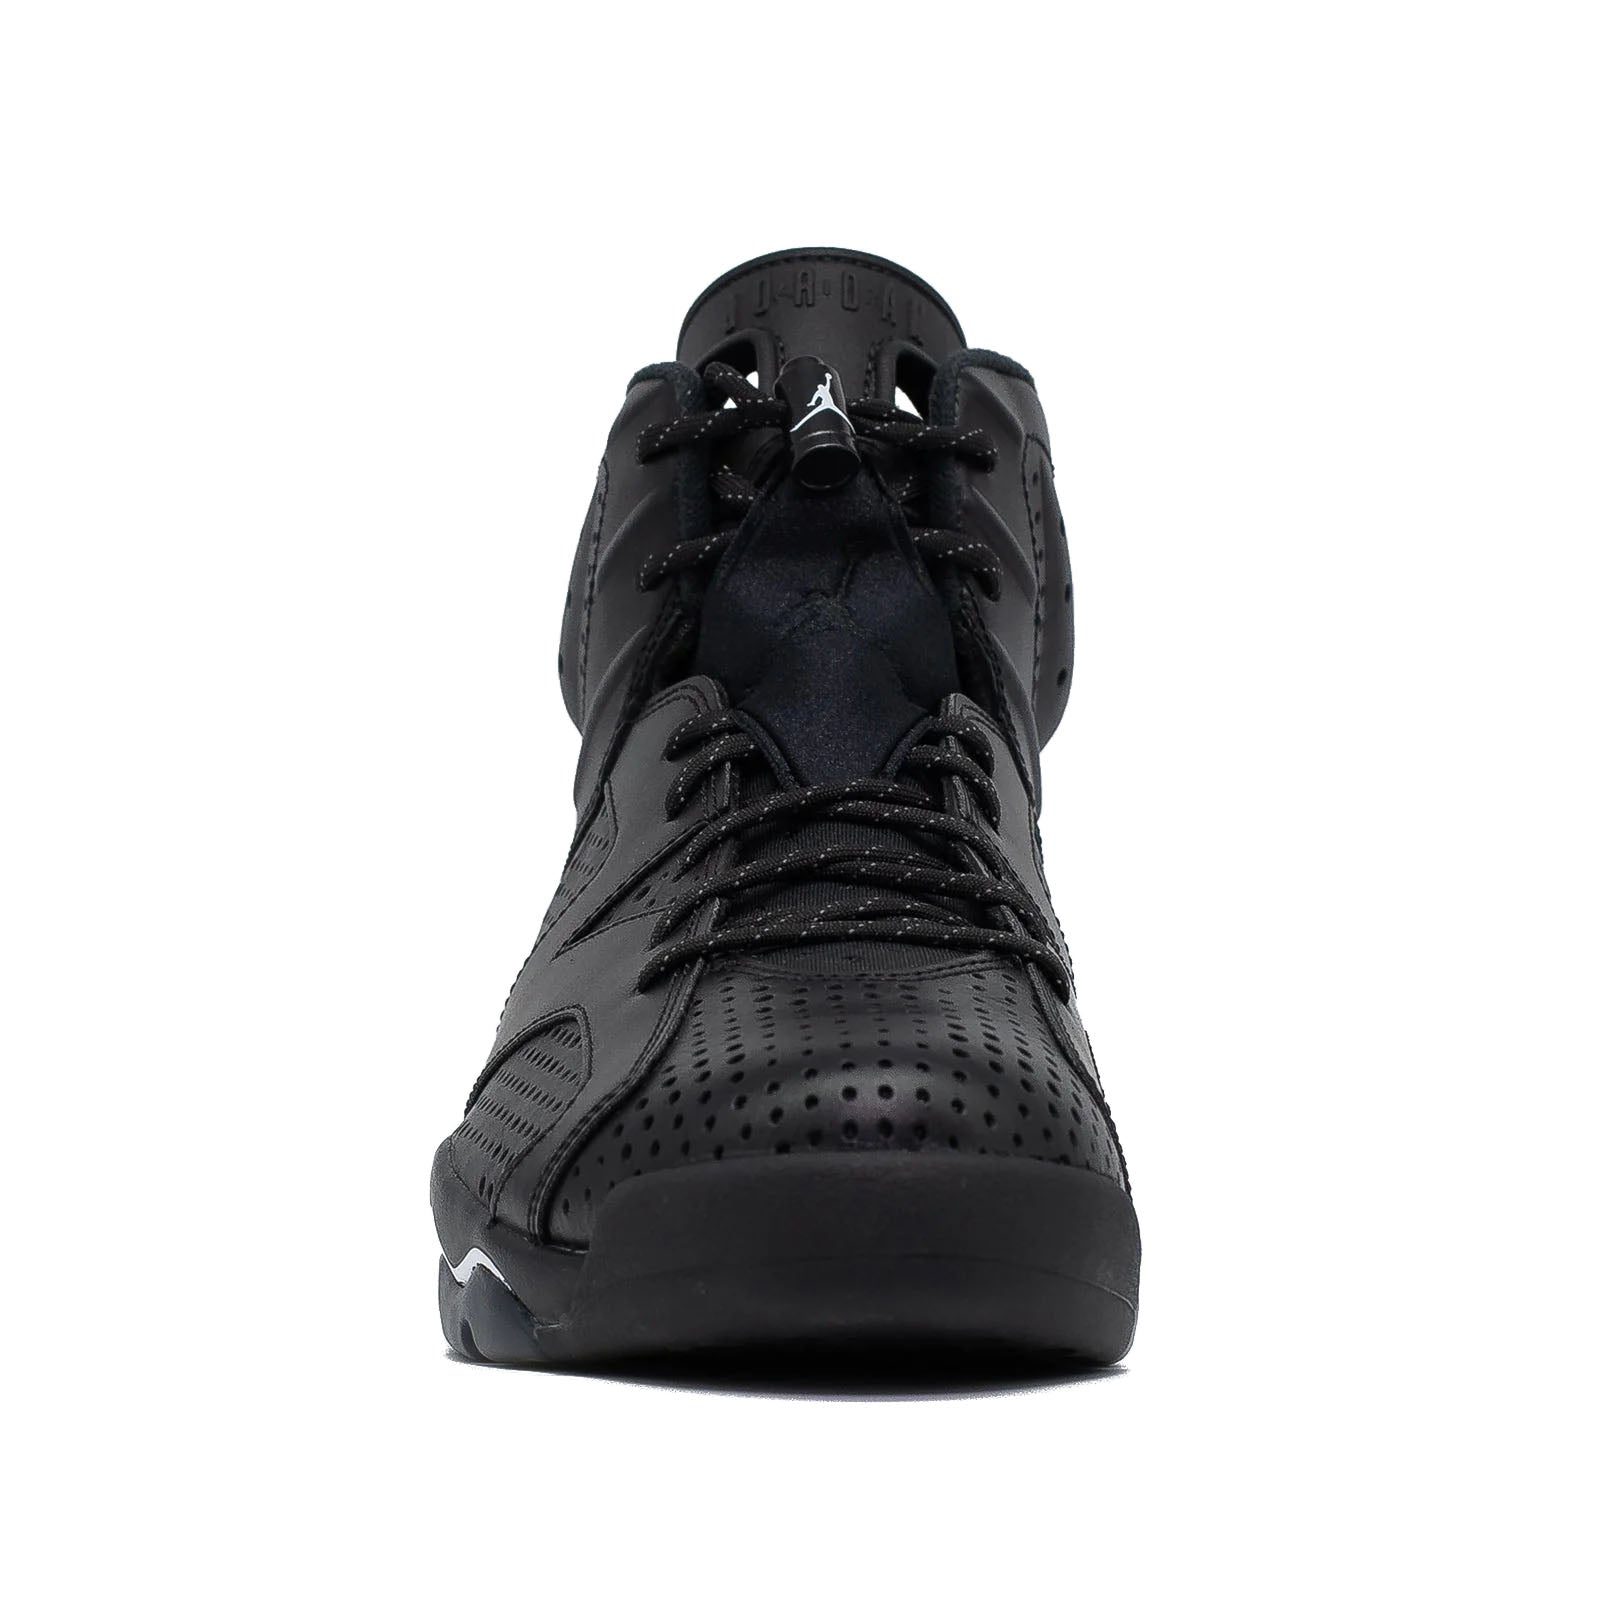 Air Jordan 6, Black Cat